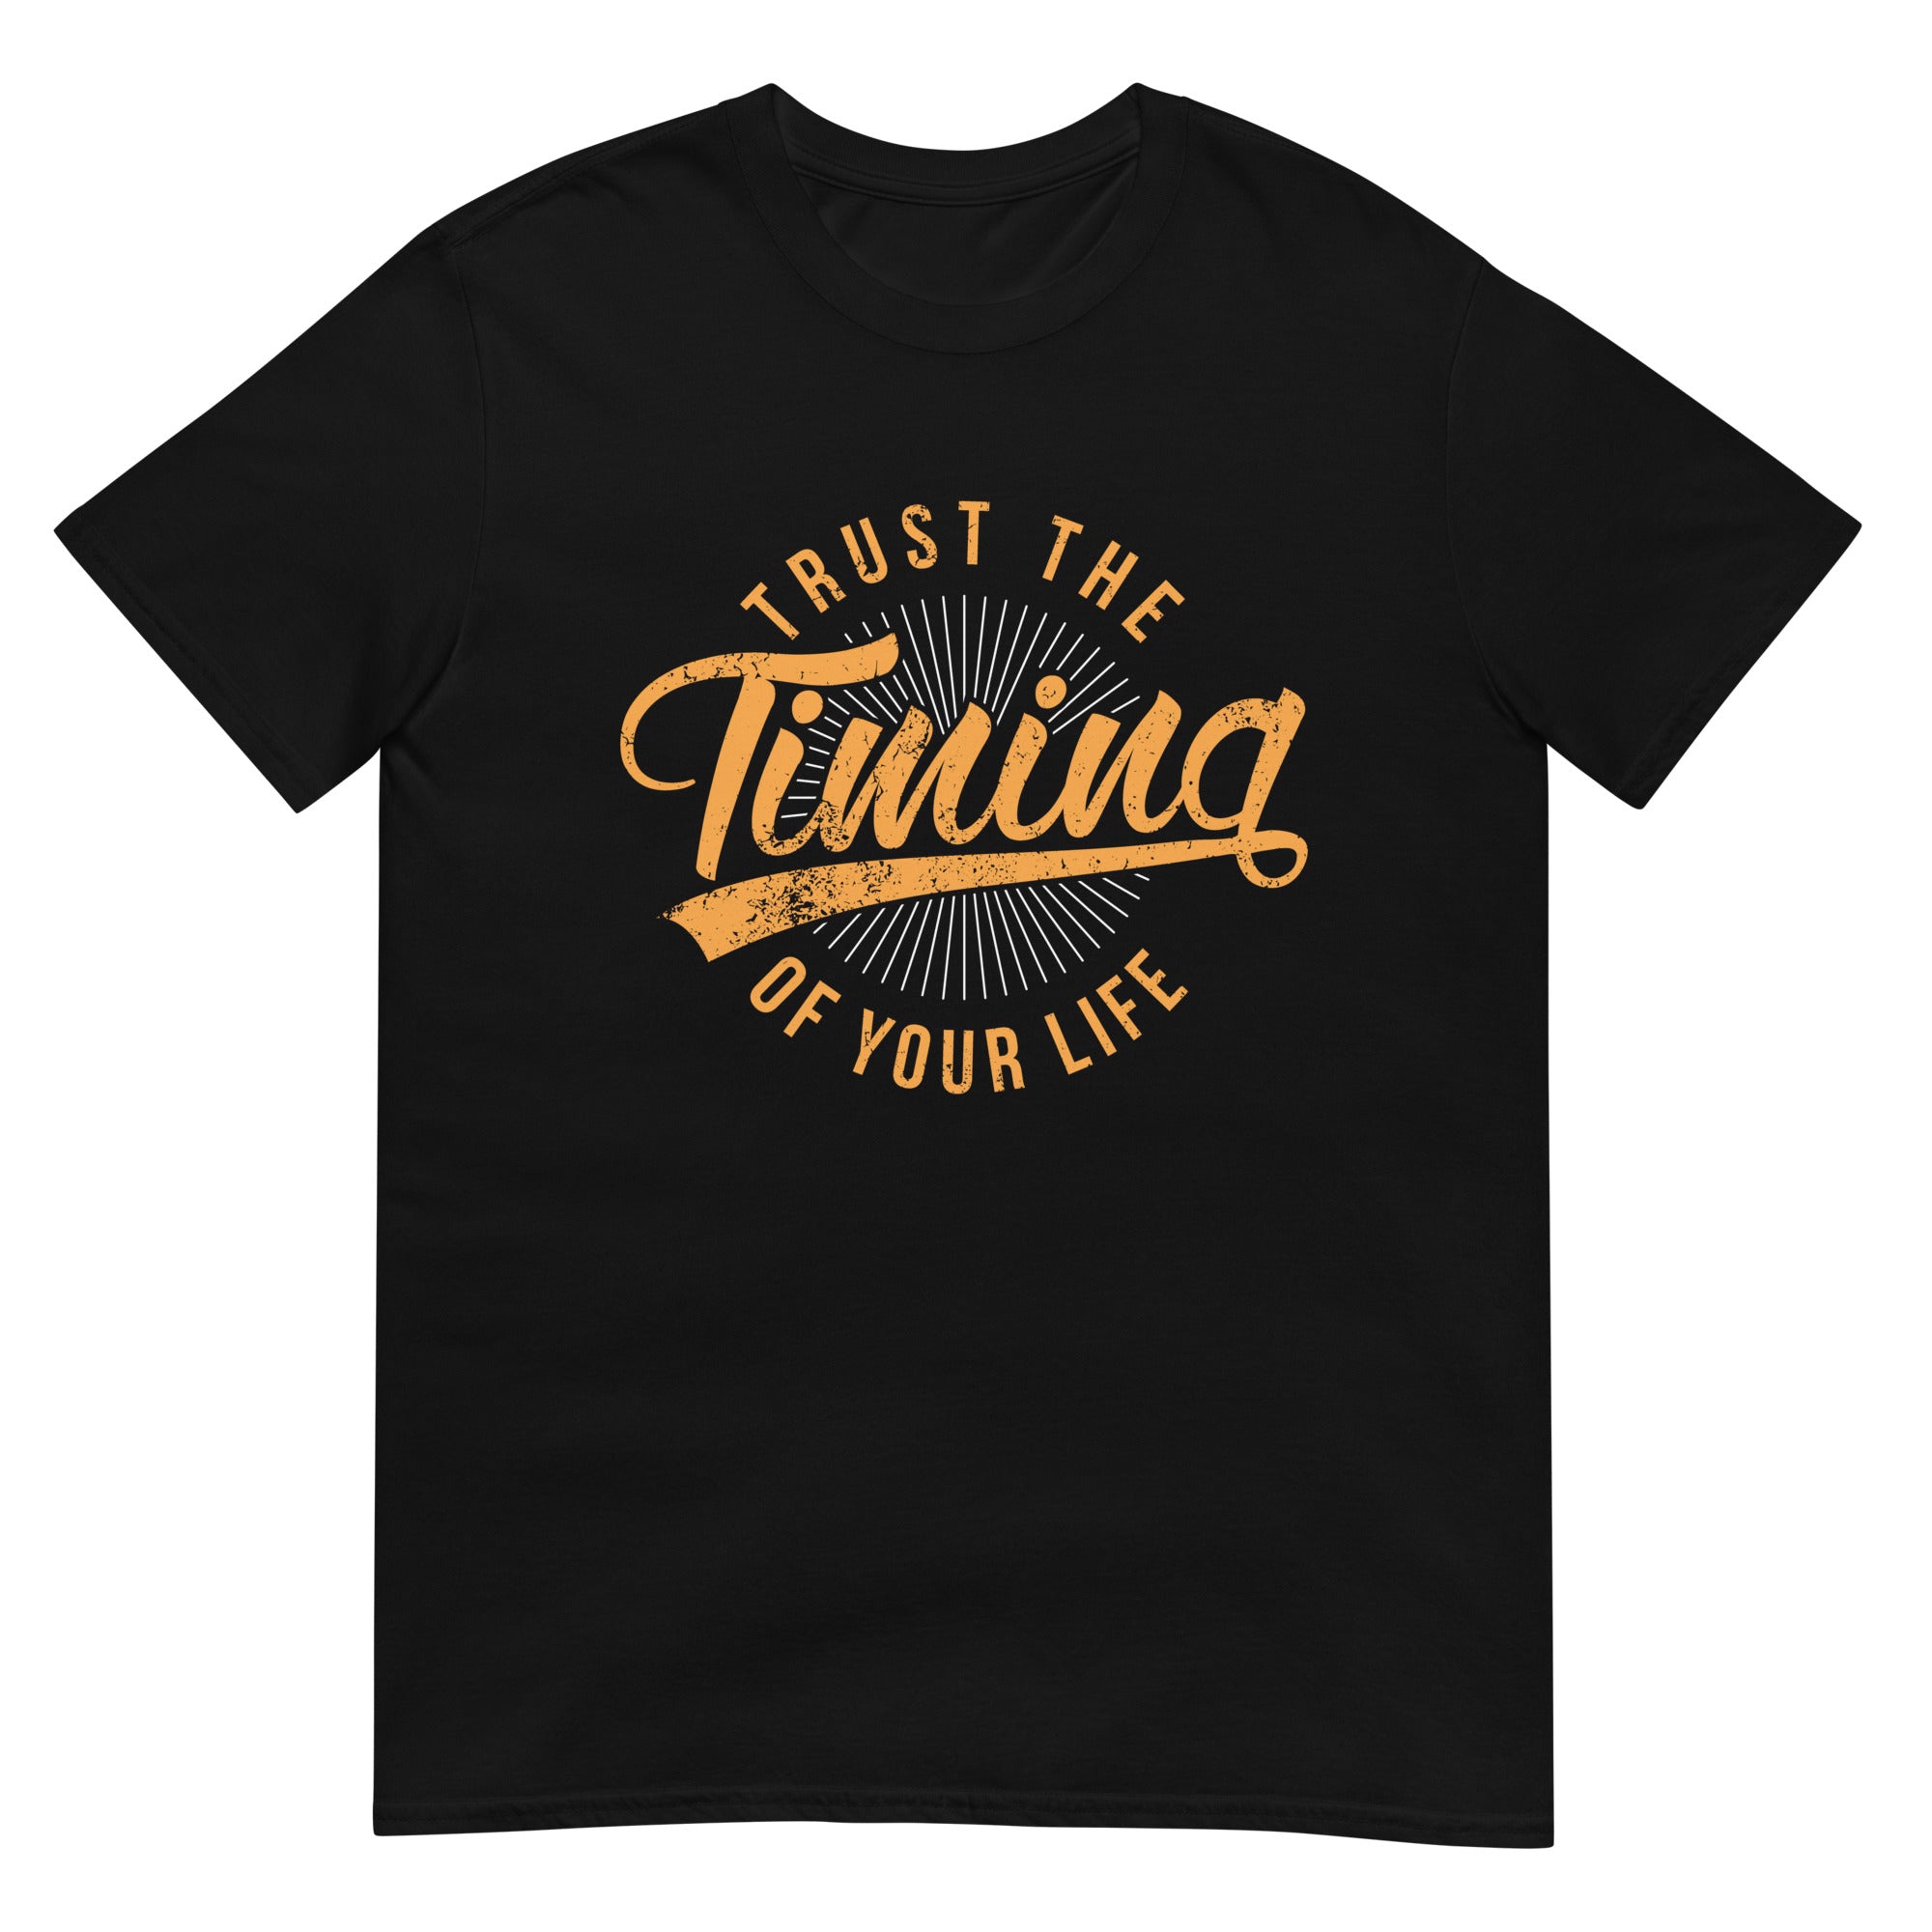 Trust The Timing - Short-Sleeve Unisex T-Shirt